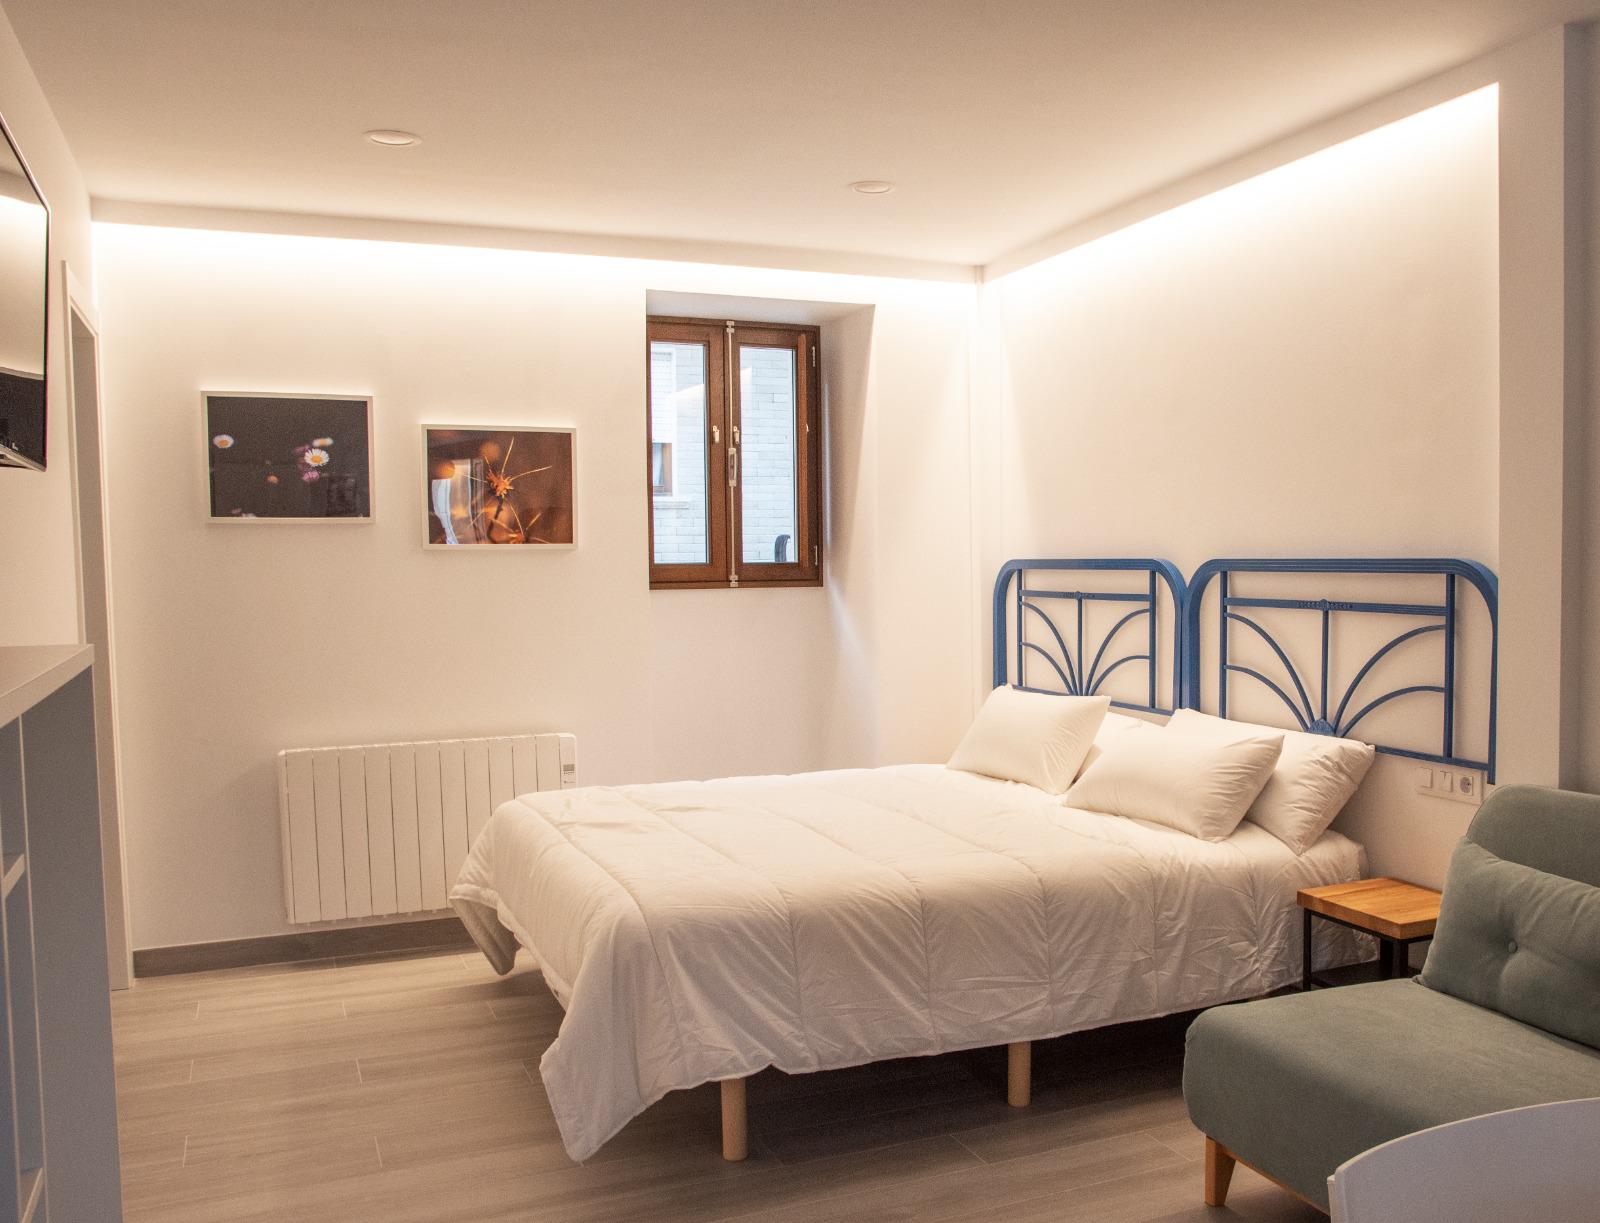 Images Marujita Vilanova, alojamiento singular. All you need is loft.